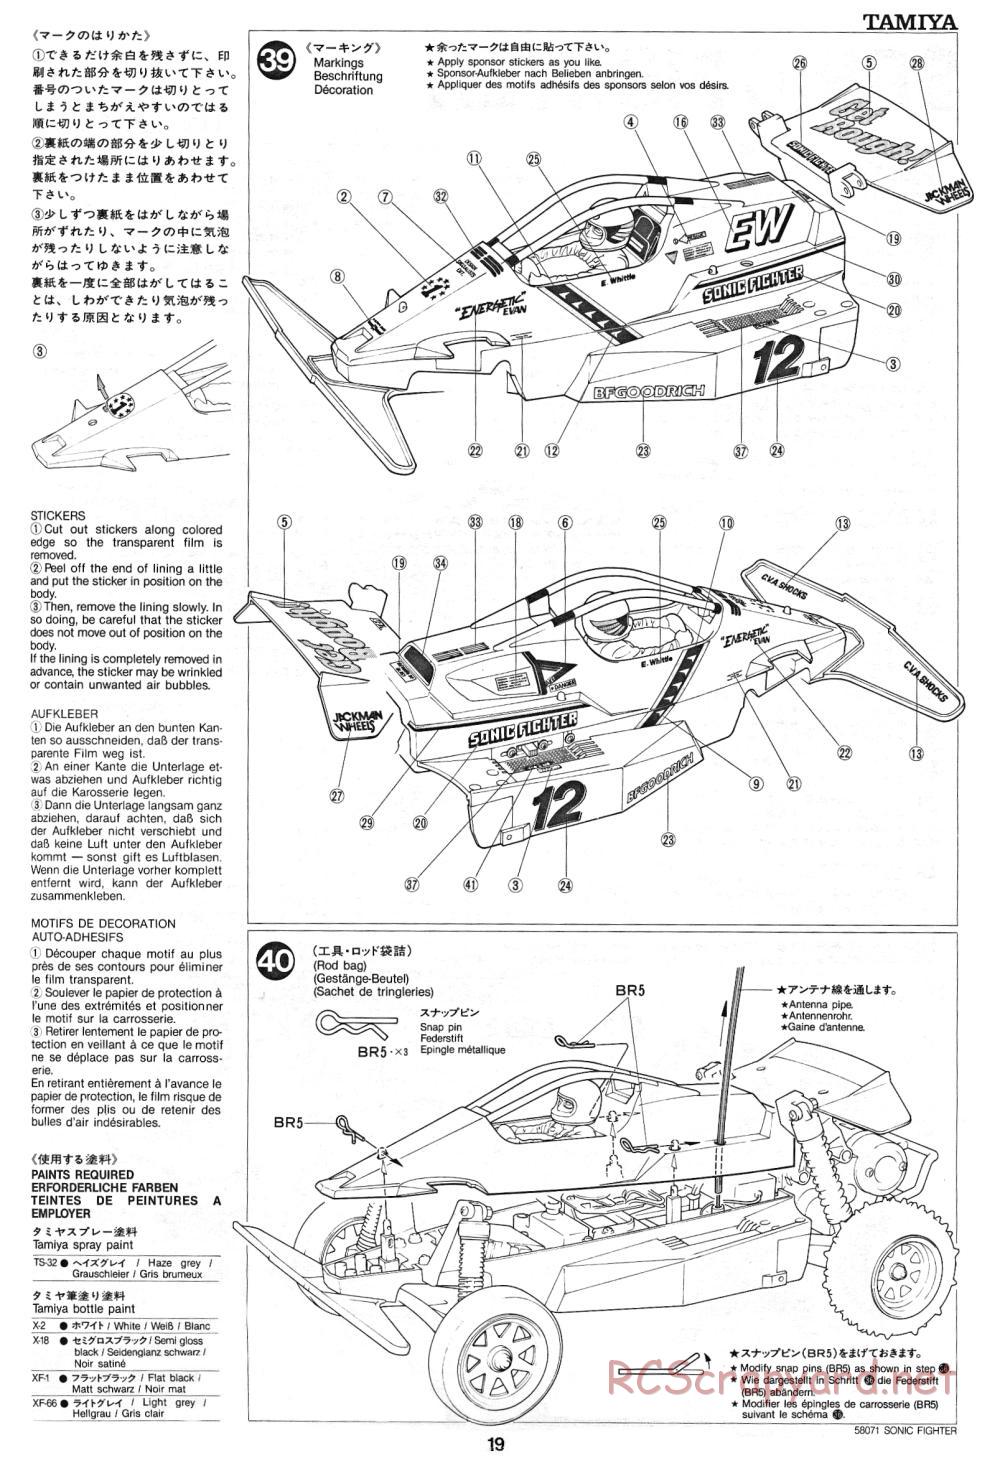 Tamiya - Sonic Fighter - 58071 - Manual - Page 19